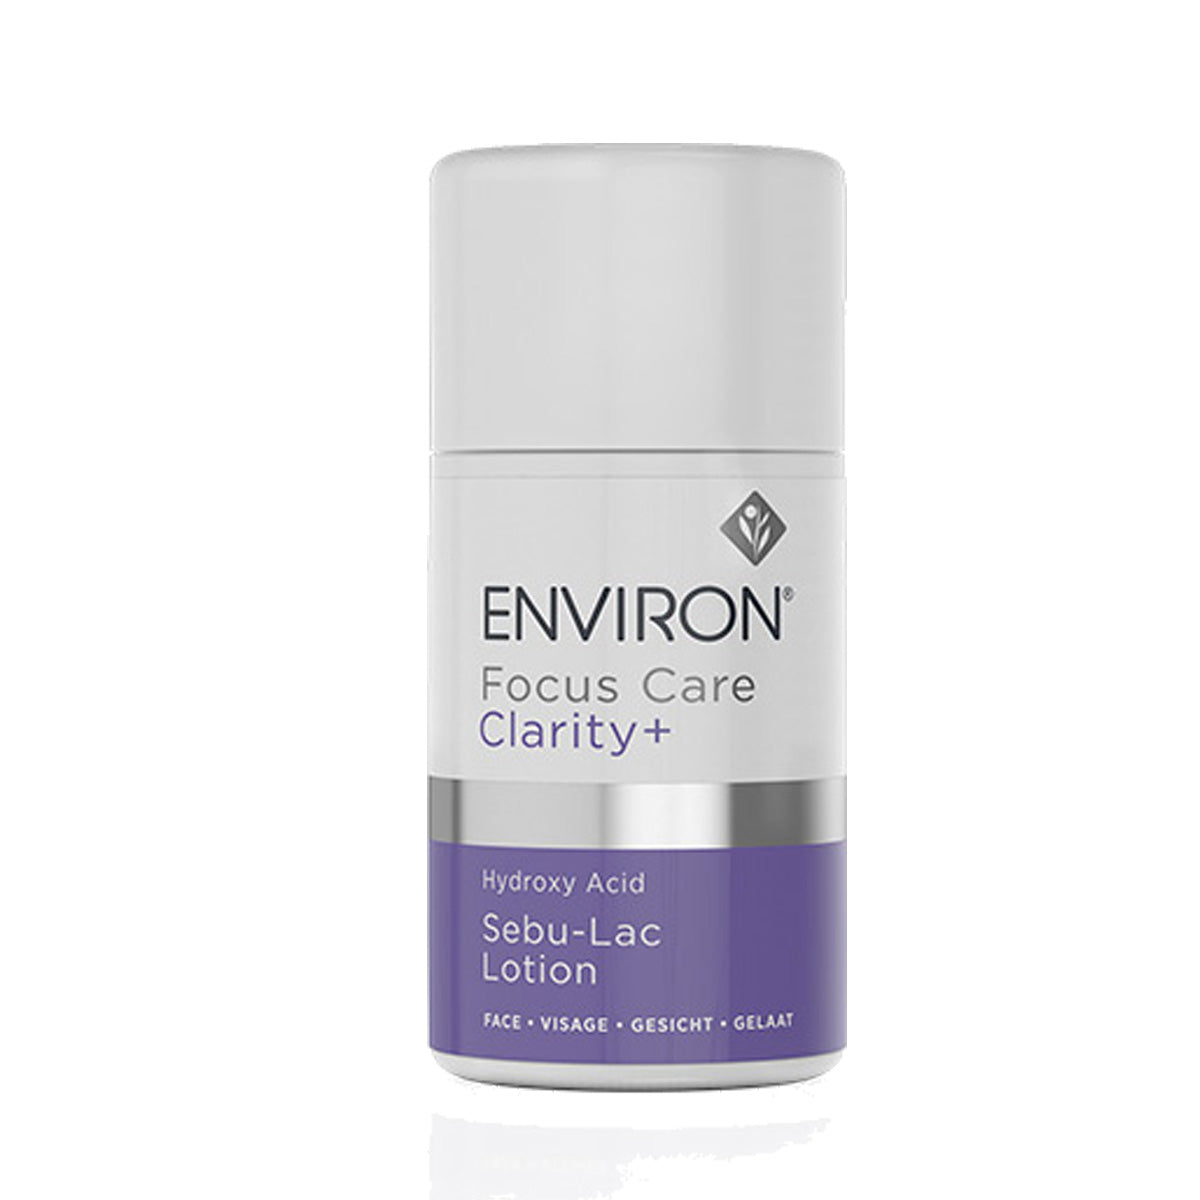 Focus Care Clarity+ Hydroxy Acid Sebu-Lac Lotion